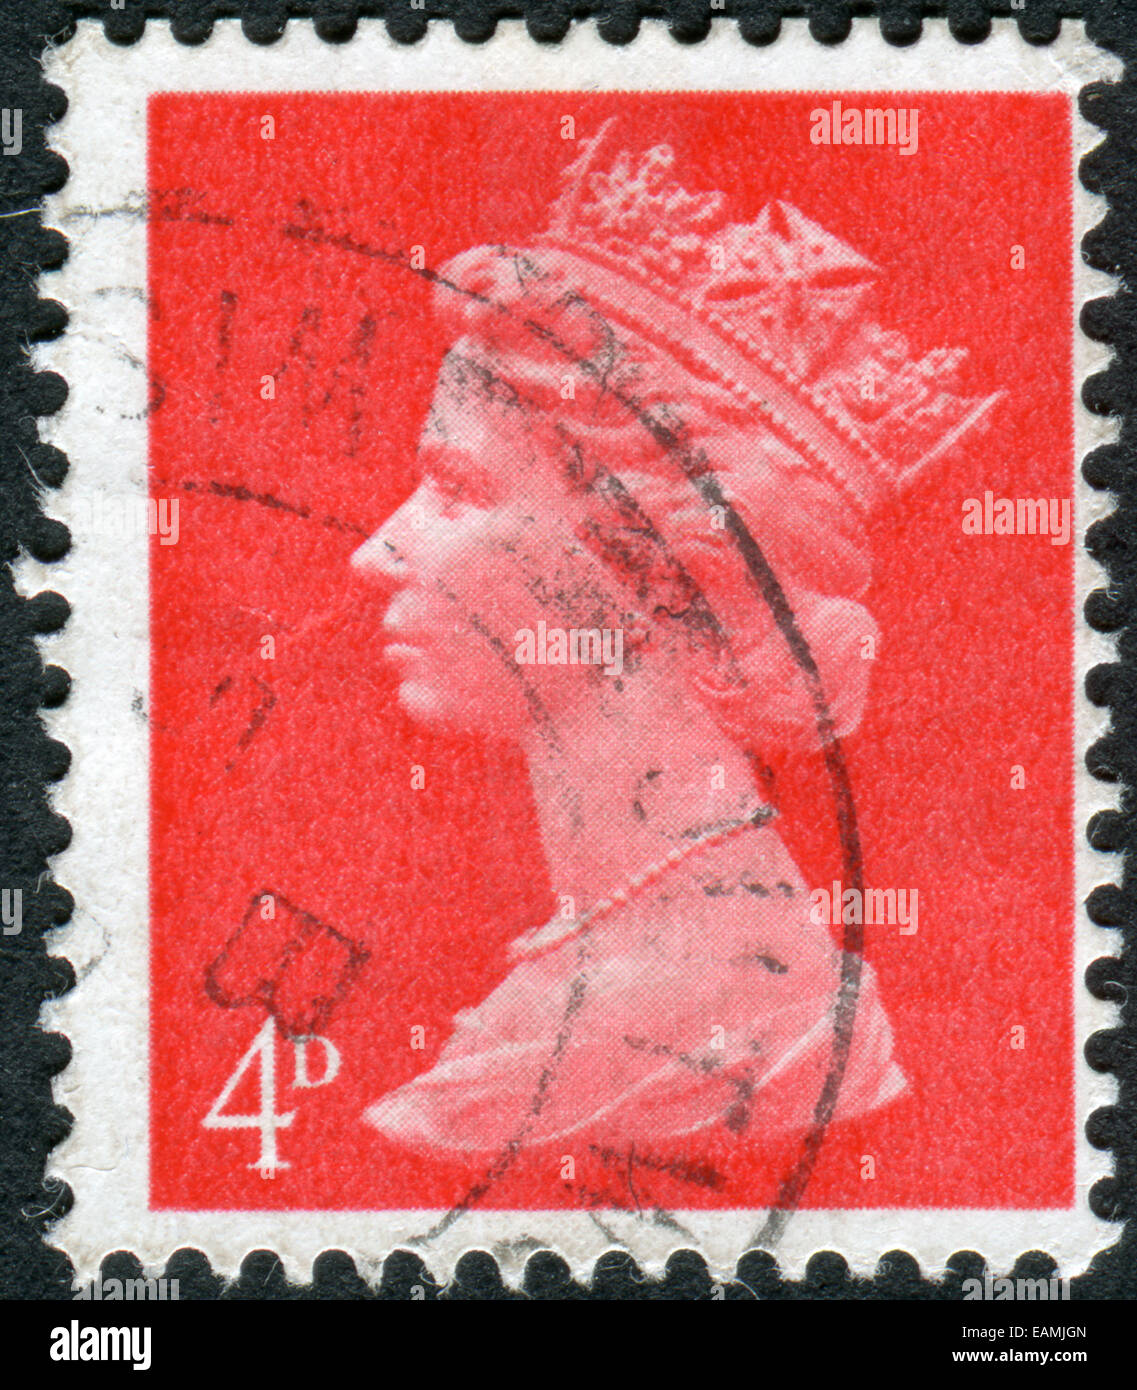 UNITED KINGDOM - CIRCA 1969: Postage stamp printed in England, shows a portrait of Queen Elizabeth II, circa 1969 Stock Photo